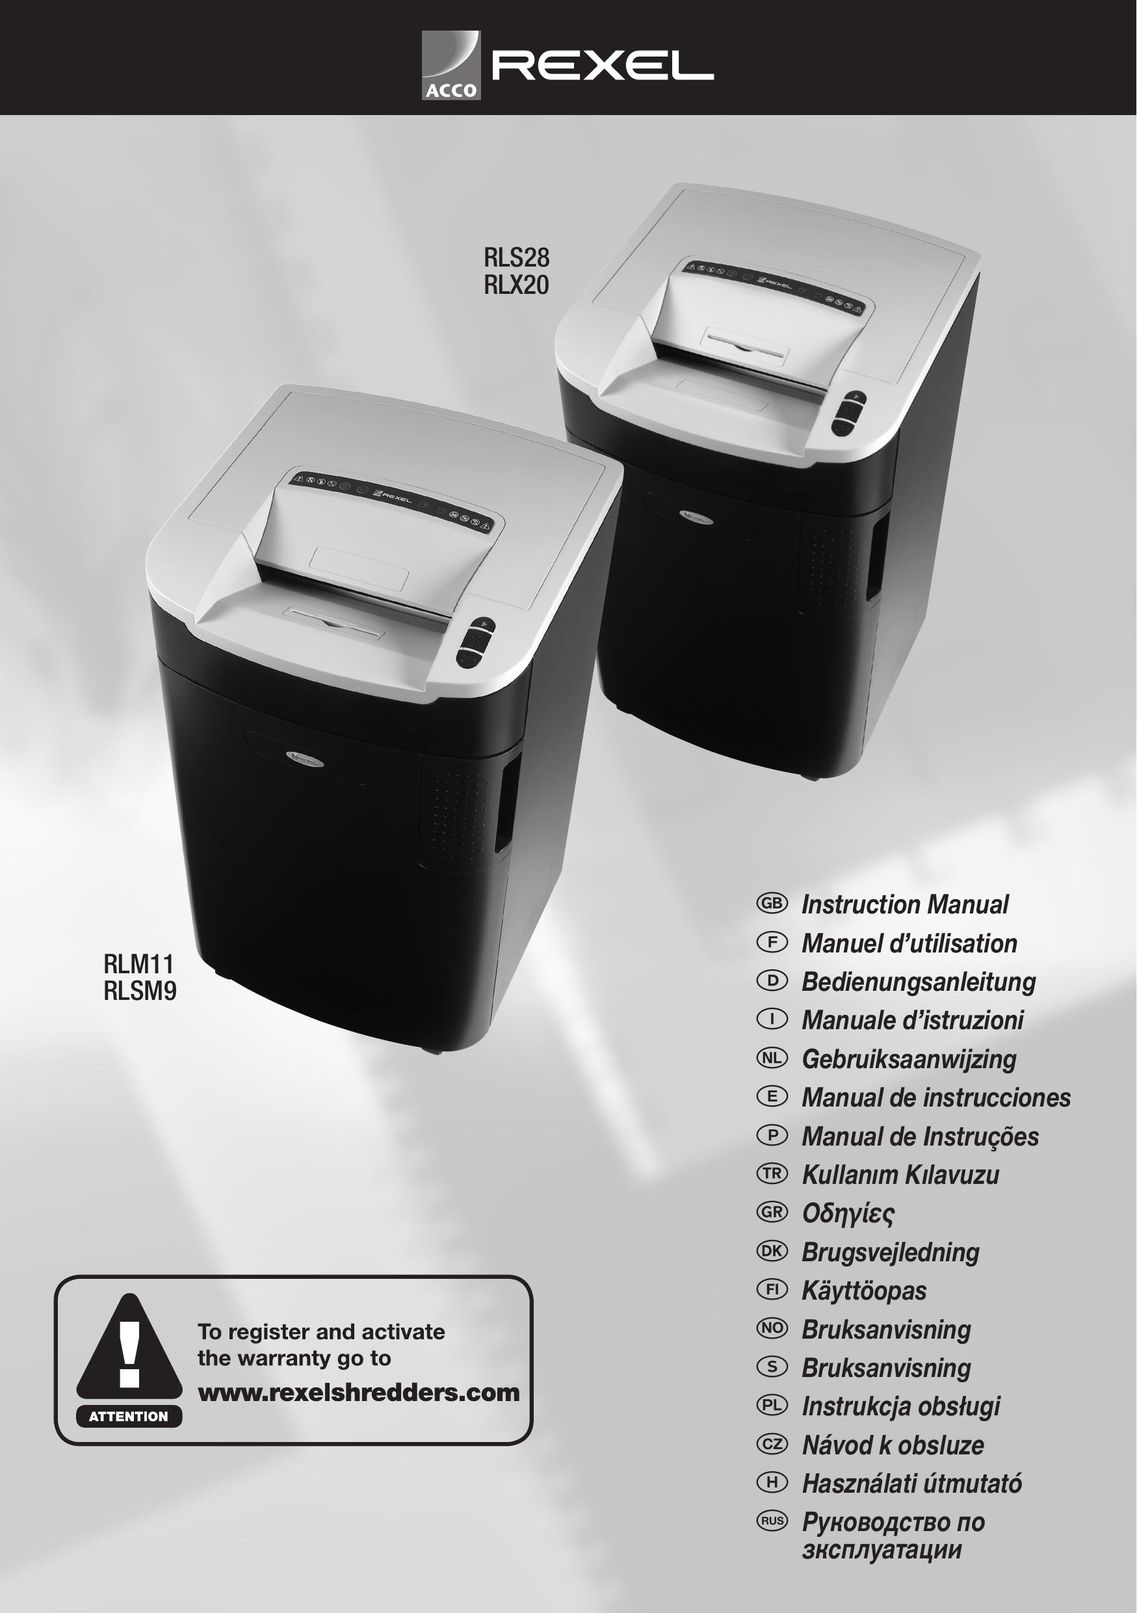 ACCO Brands RLS28 Paper Shredder User Manual